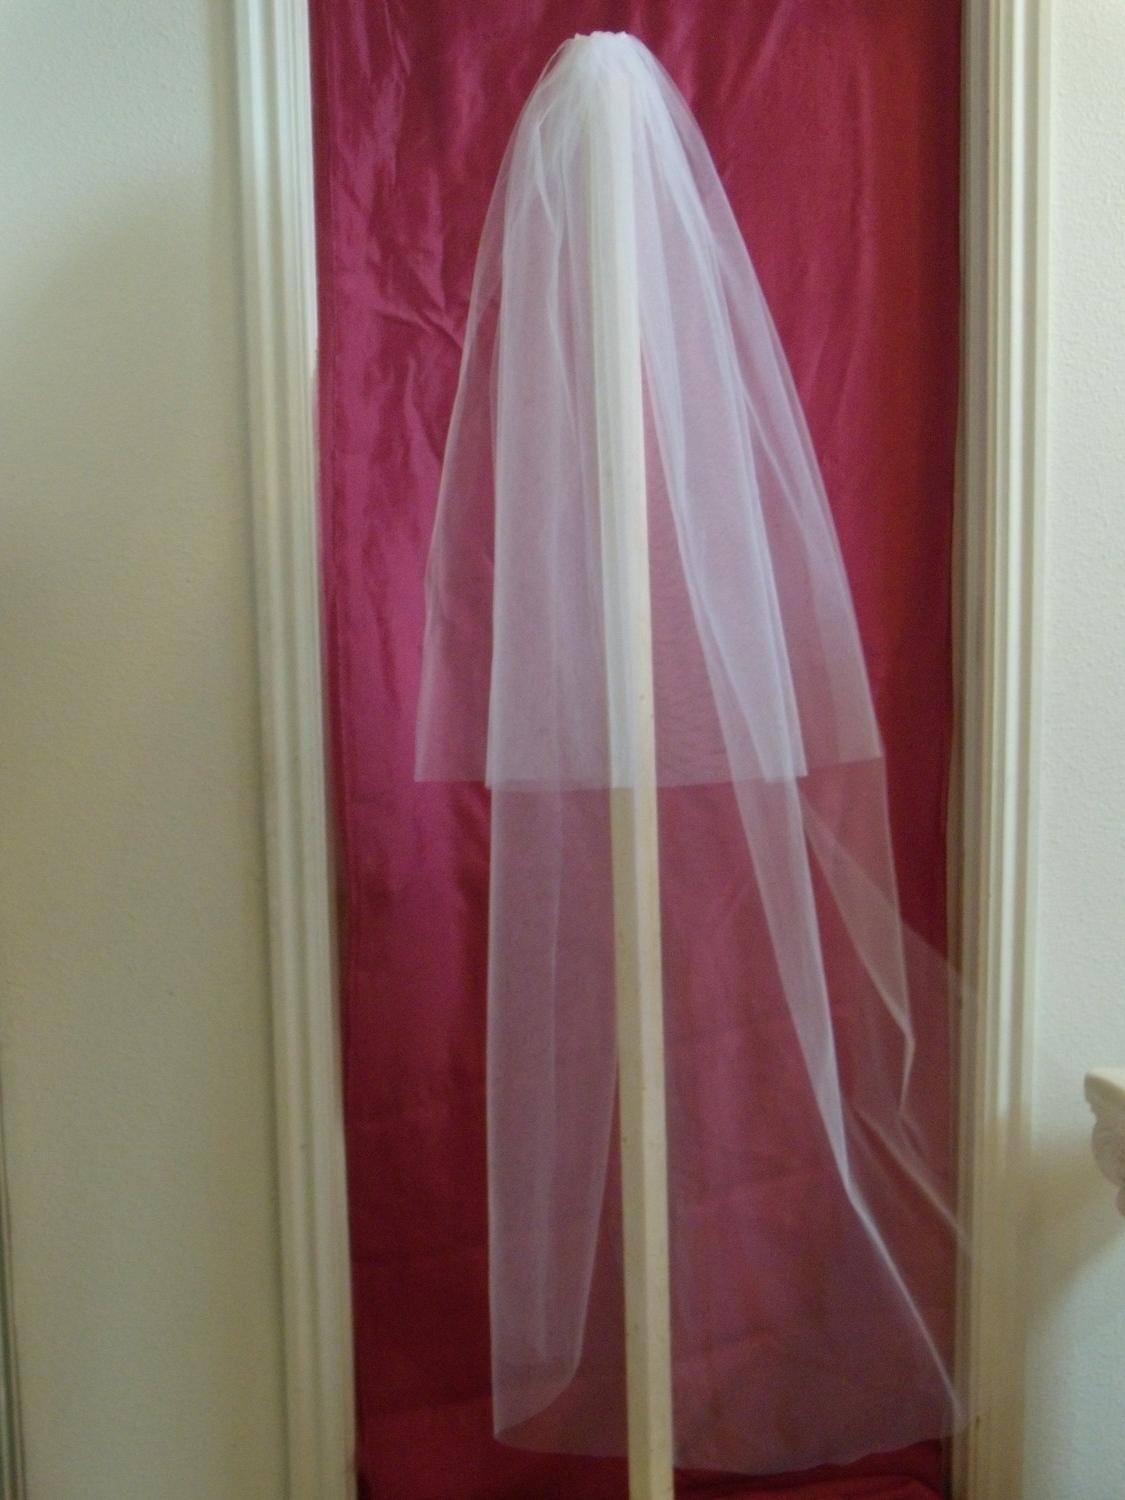 Two tier waltz length wedding veil 54 wide X 49 long